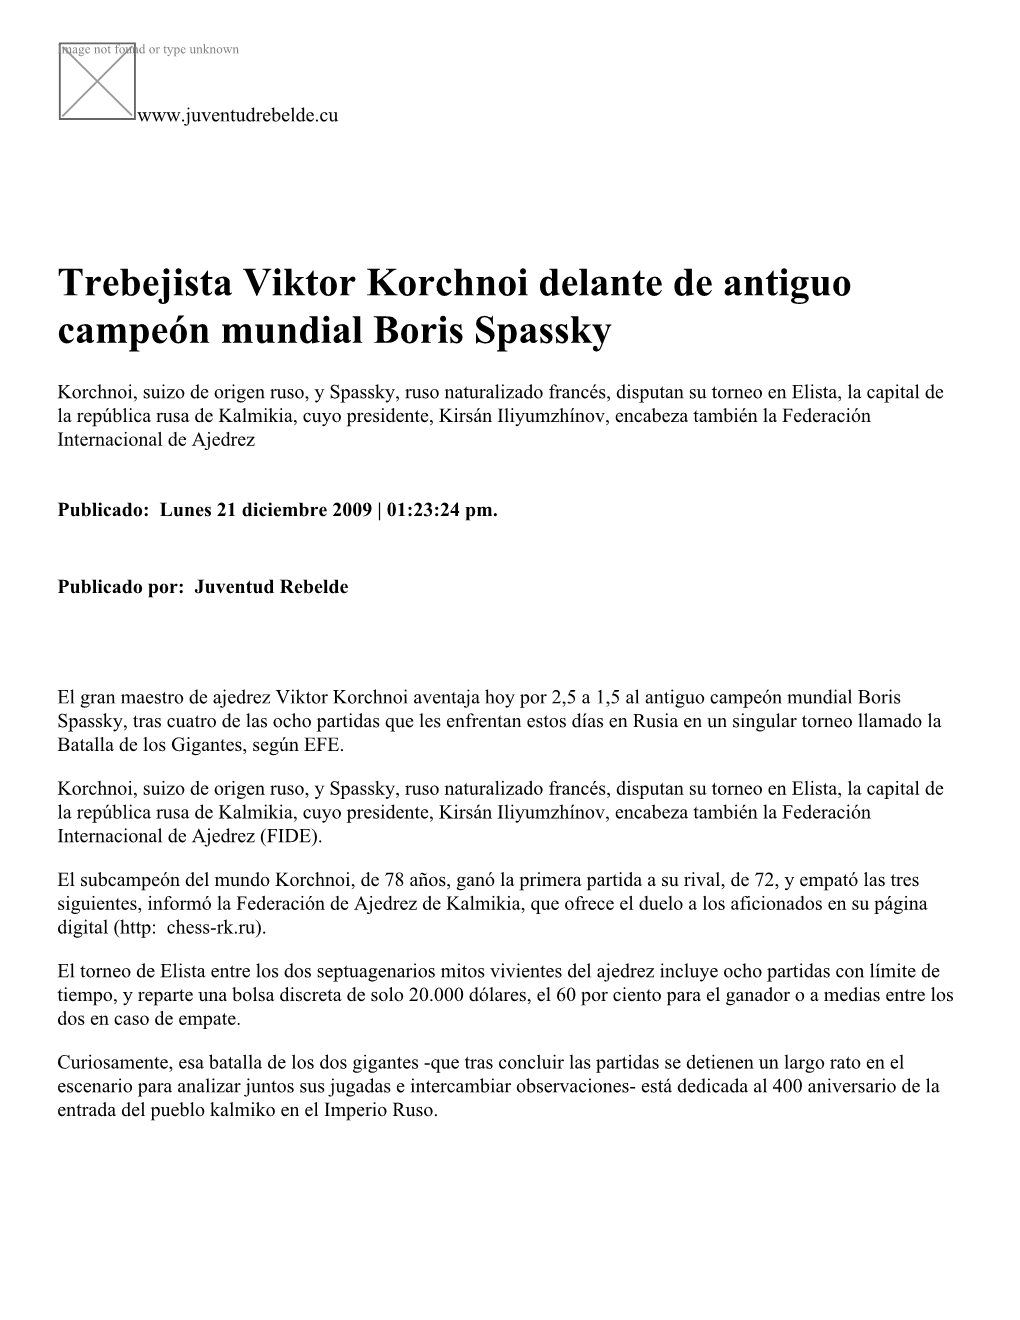 Trebejista Viktor Korchnoi Delante De Antiguo Campeón Mundial Boris Spassky